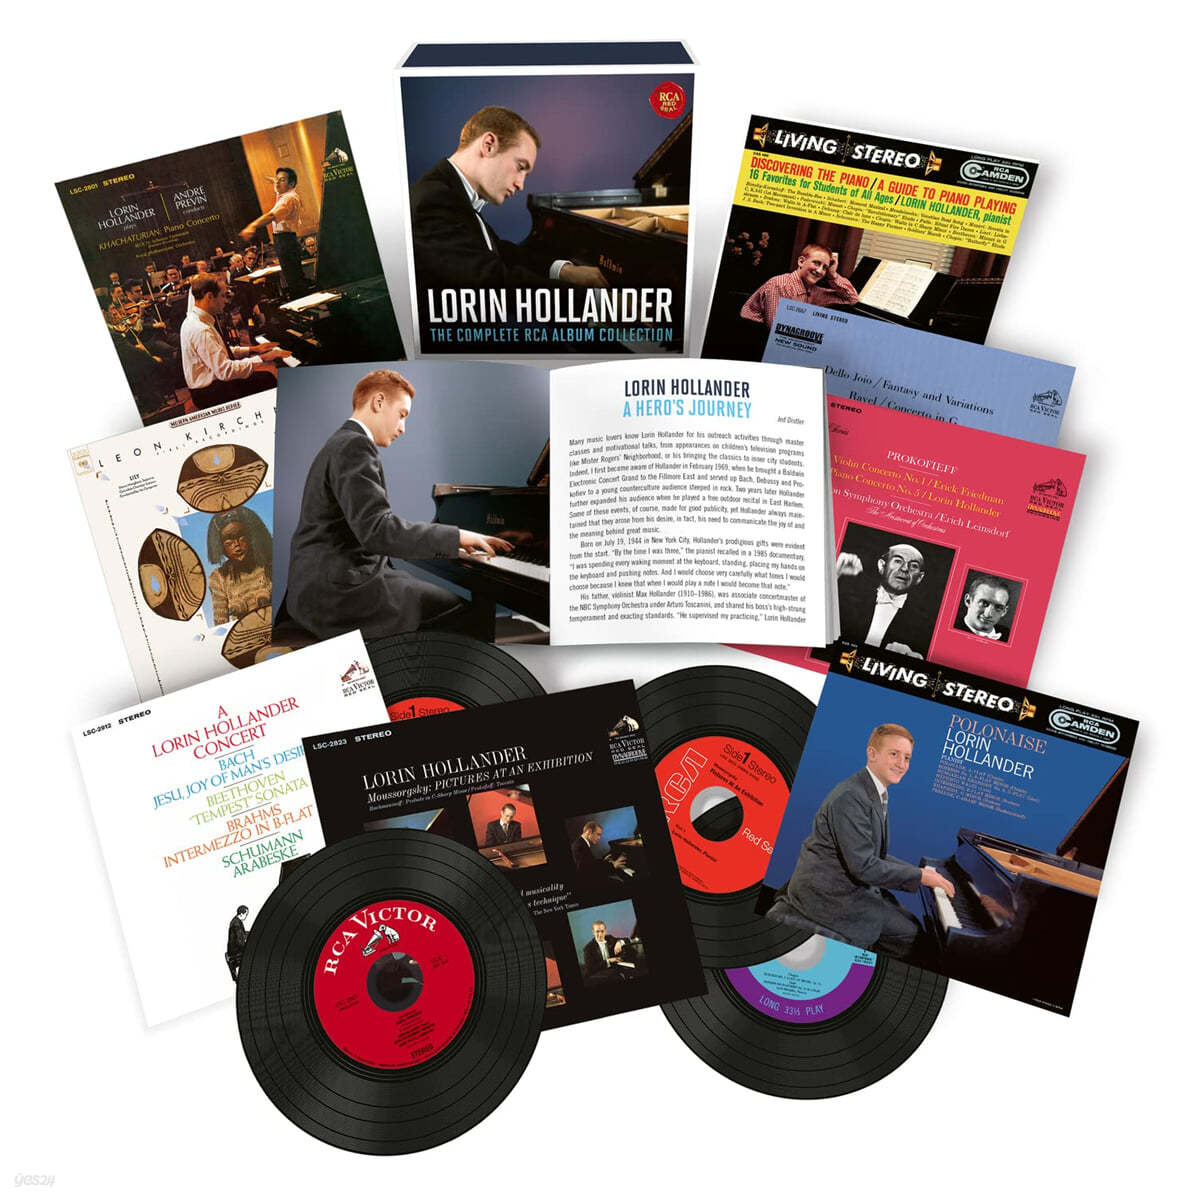 Lorin Hollander 로린 홀랜더 RCA 레코딩 전집 (The Complete RCA Album Collection)